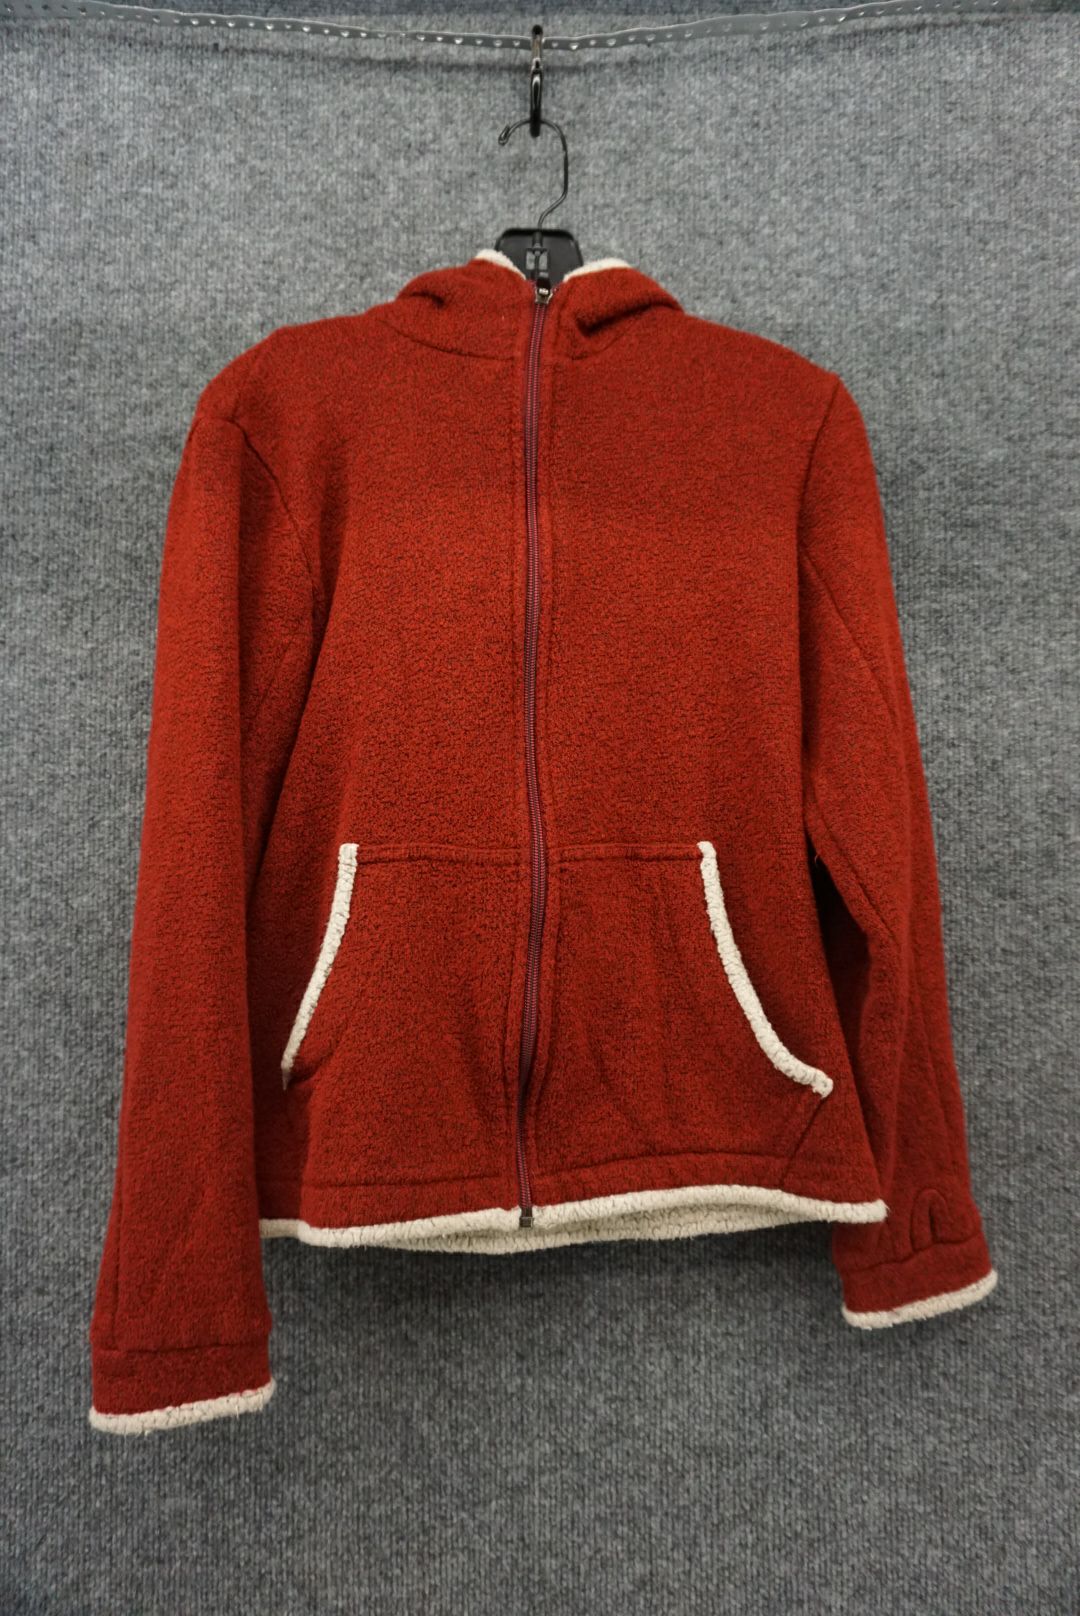 Kuhl Red Size W Medium Women's Fleece